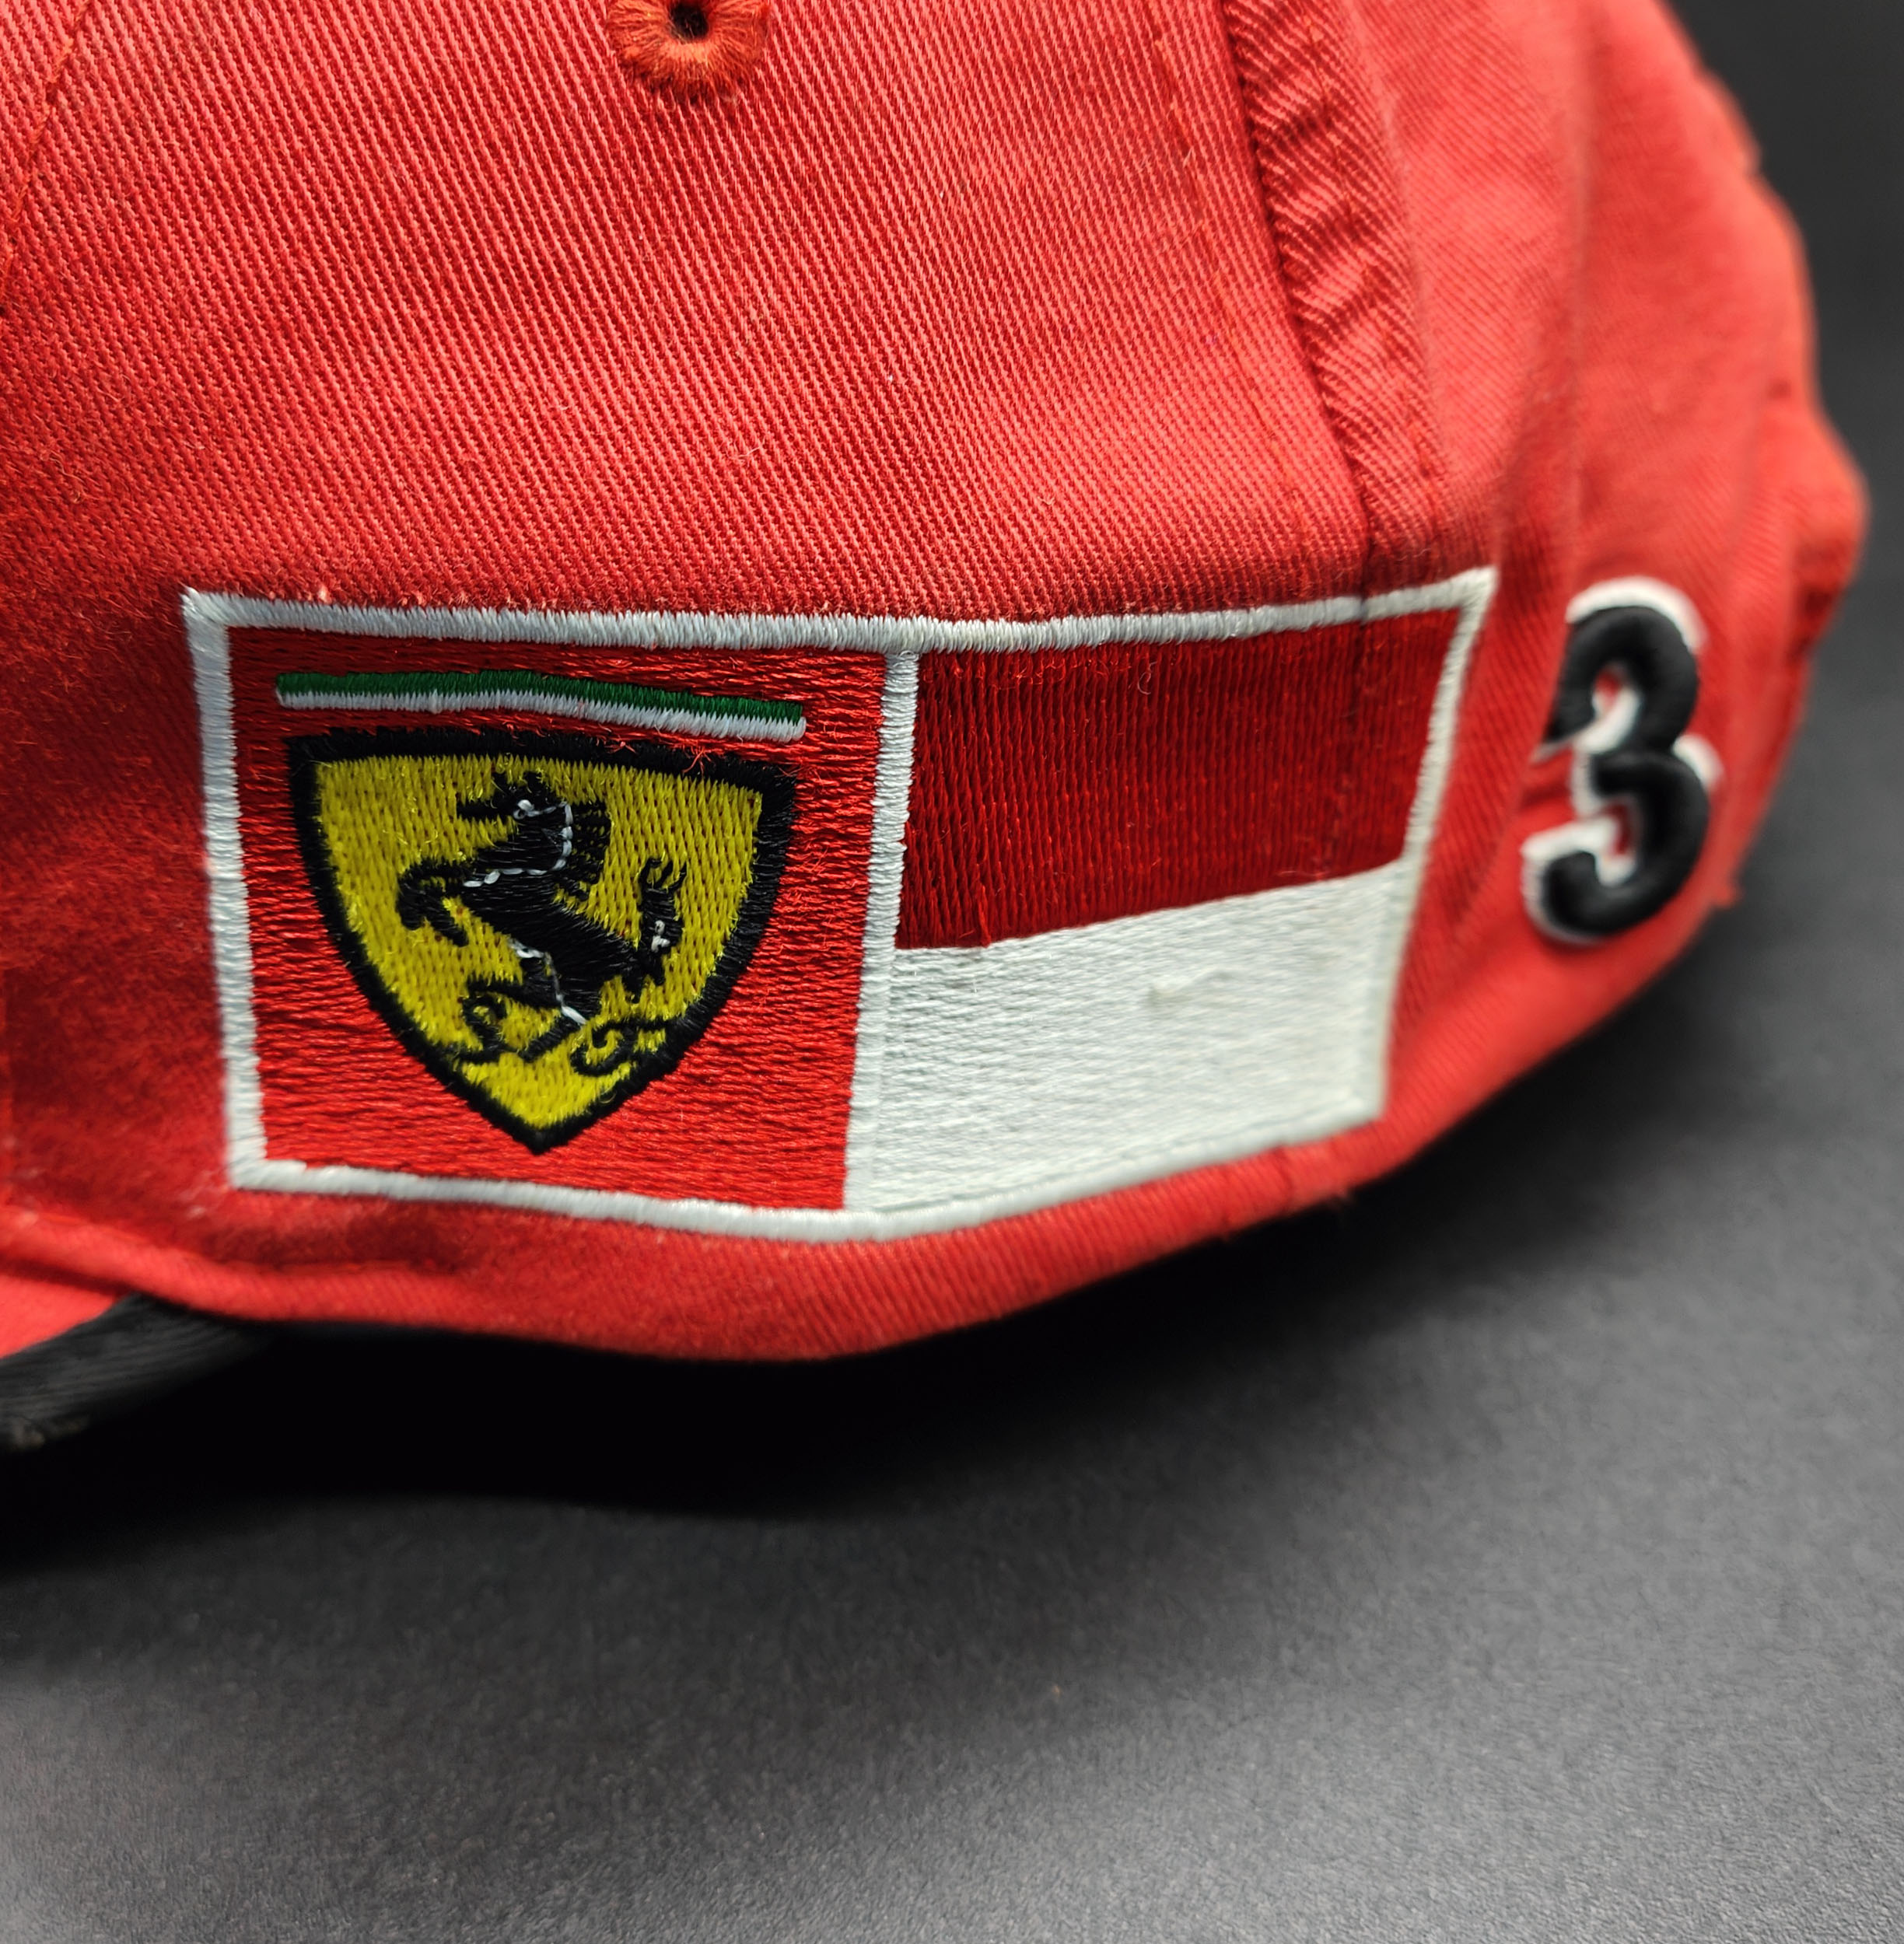 Ferrari cappellino vintage 1986 » BOLA Football Store